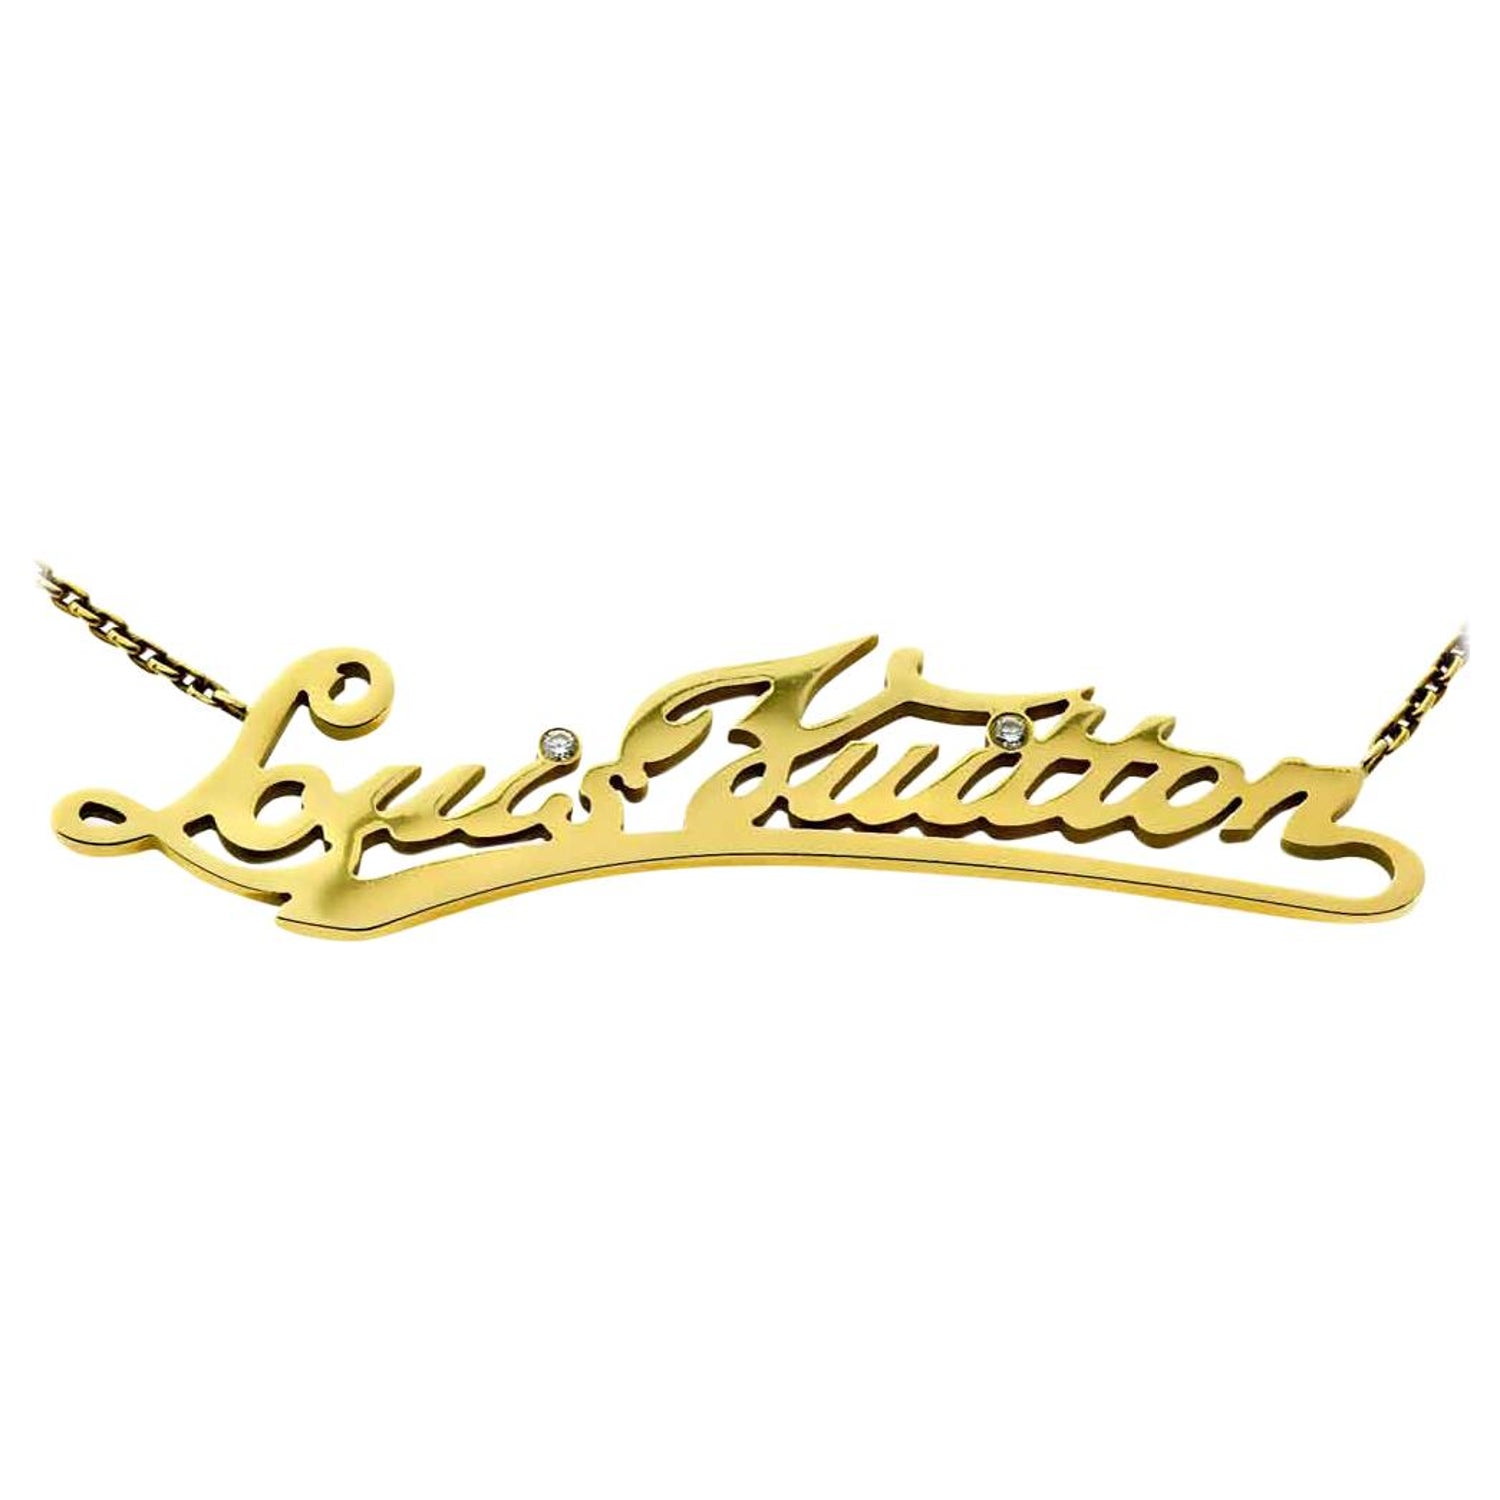 Louis Vuitton Empreinte Bracelet Silk Cord with 18K White Gold at 1stDibs